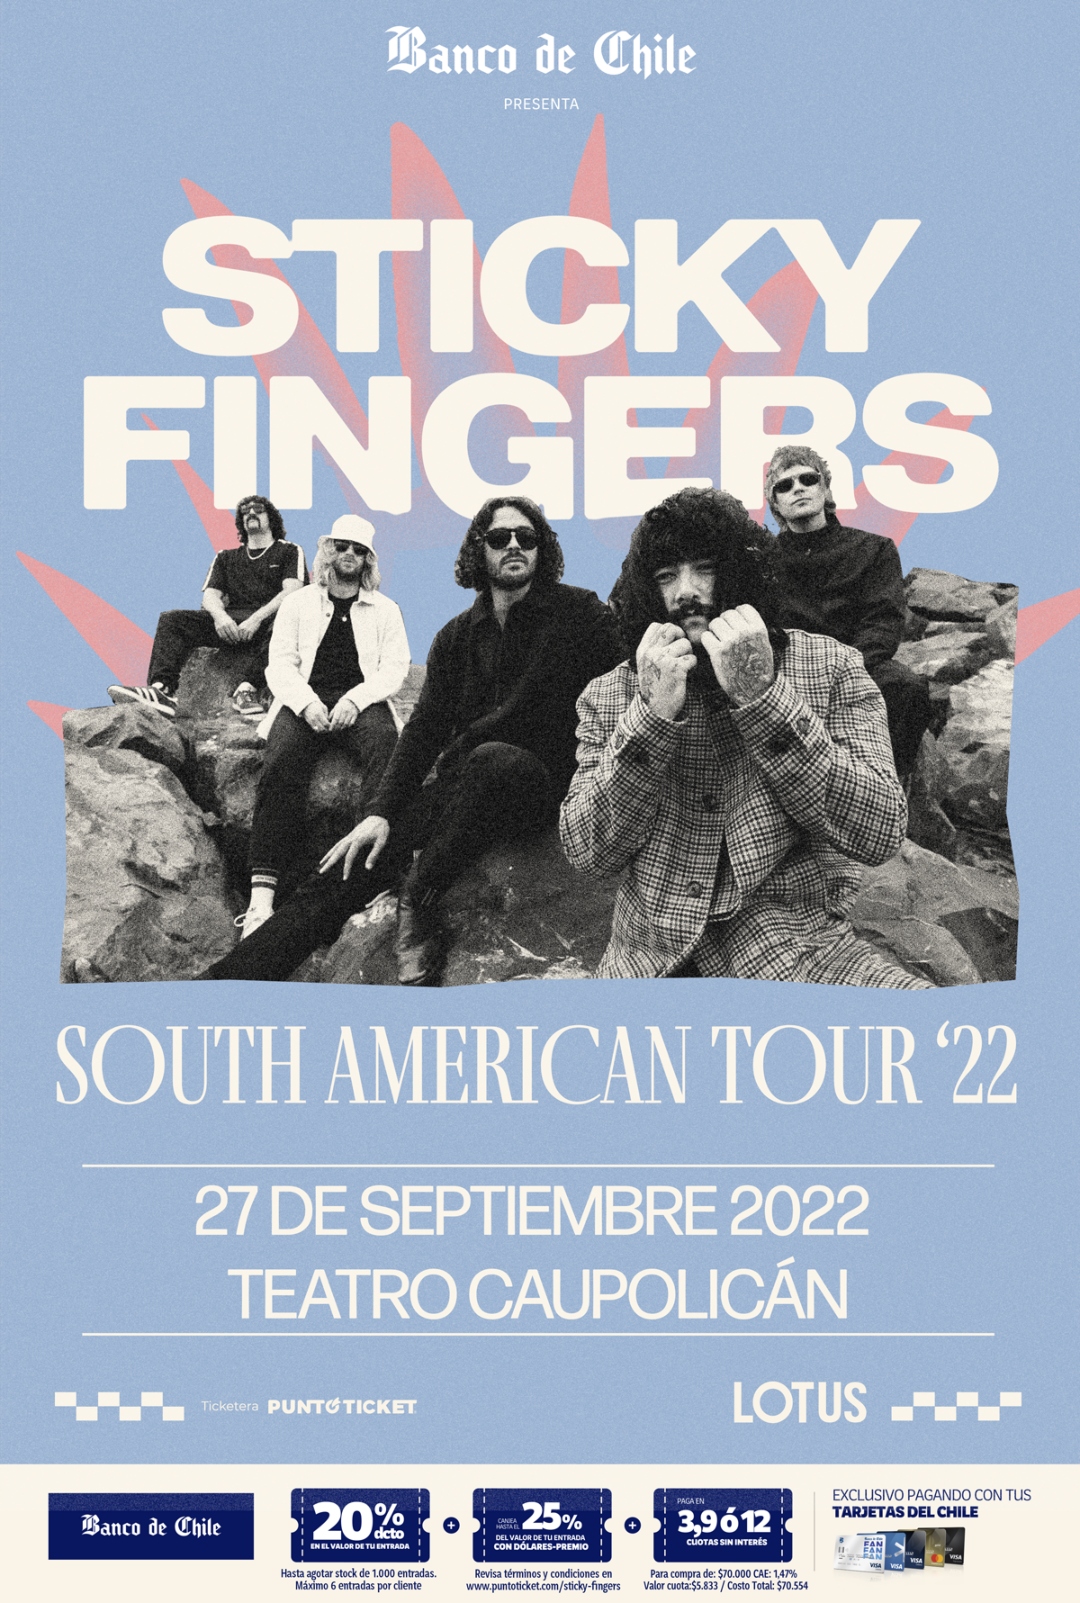 sticky fingers lekkerboy tour setlist